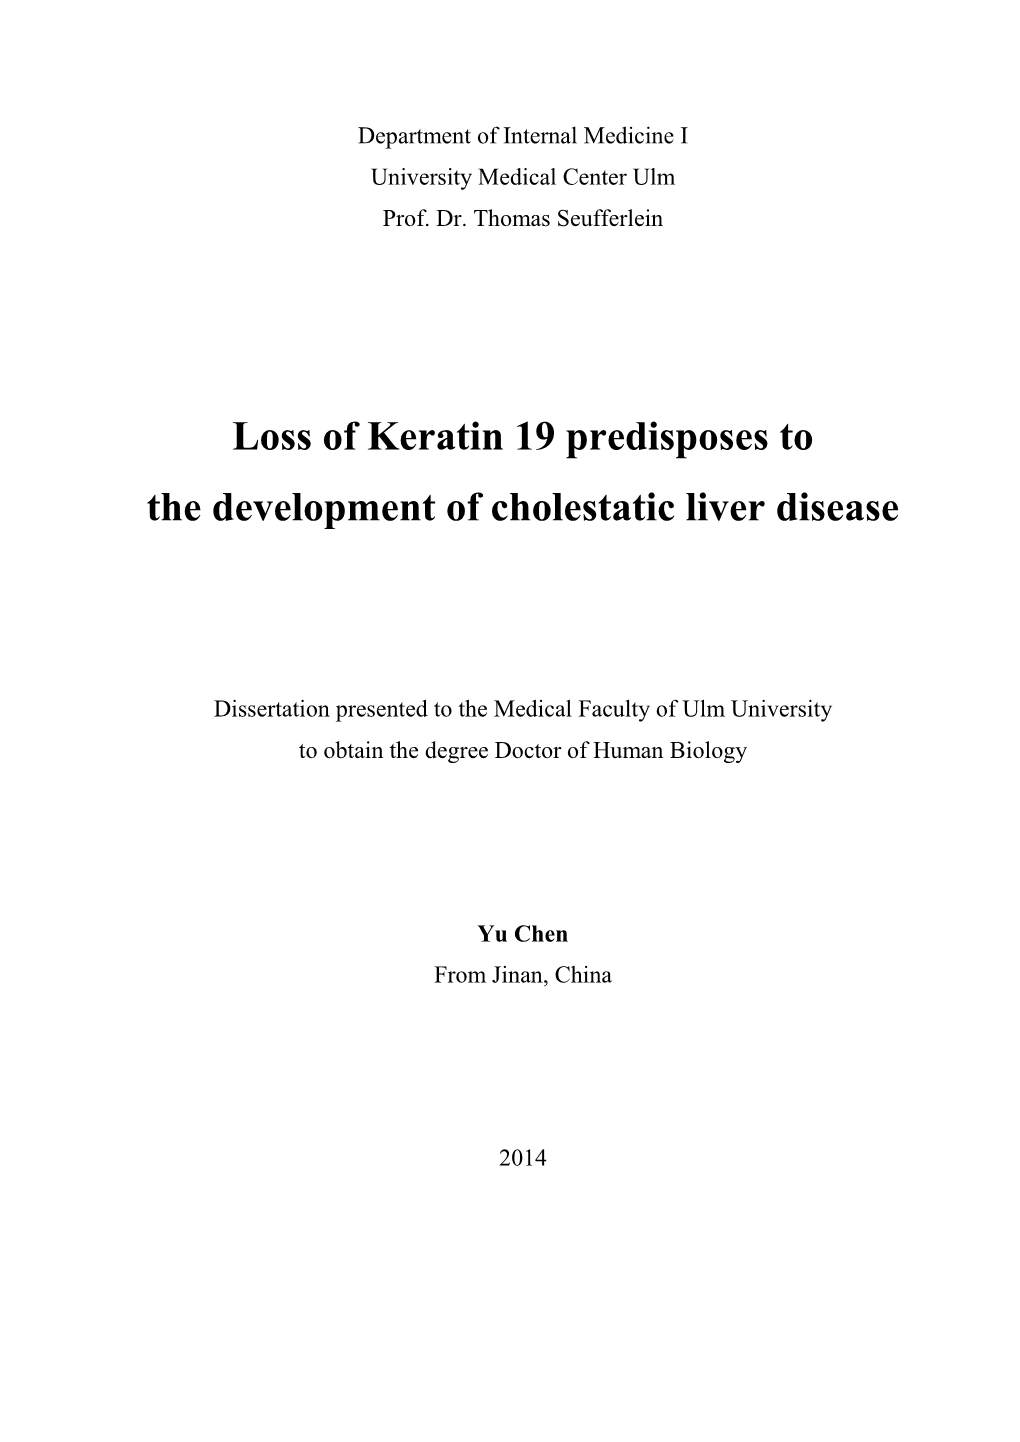 Loss of Keratin 19 Predisposes to the Development of Cholestatic Liver Disease